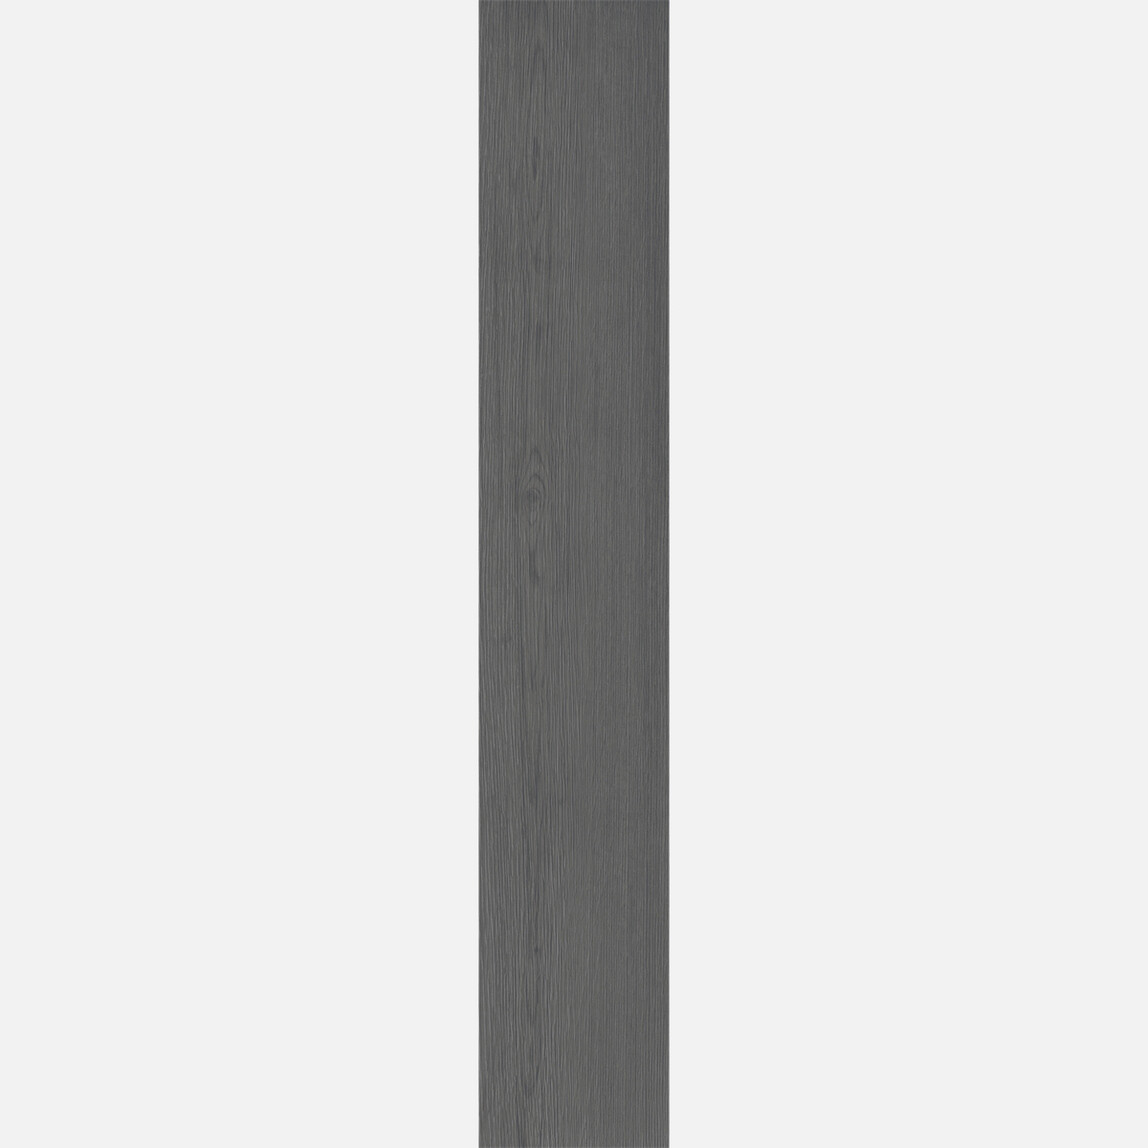    Kale Seramik Listoni Antrasit 15x90cm GS-N5122 